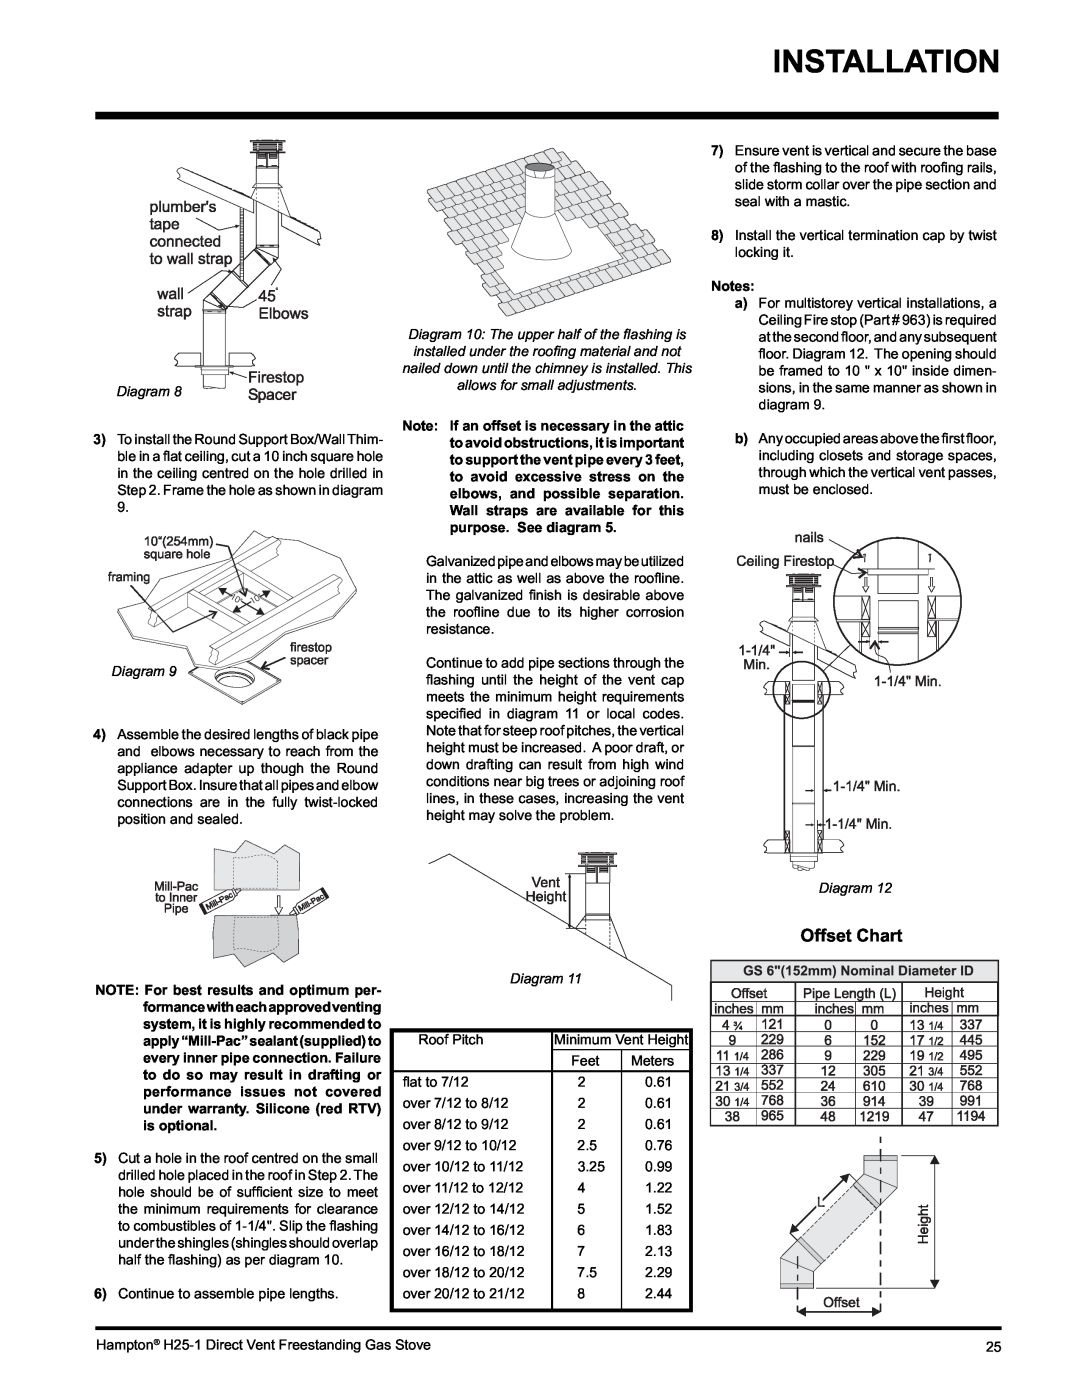 Hampton Direct H25-LP1 Propane, H25-NG1, H25-LP1 installation manual Diagram 